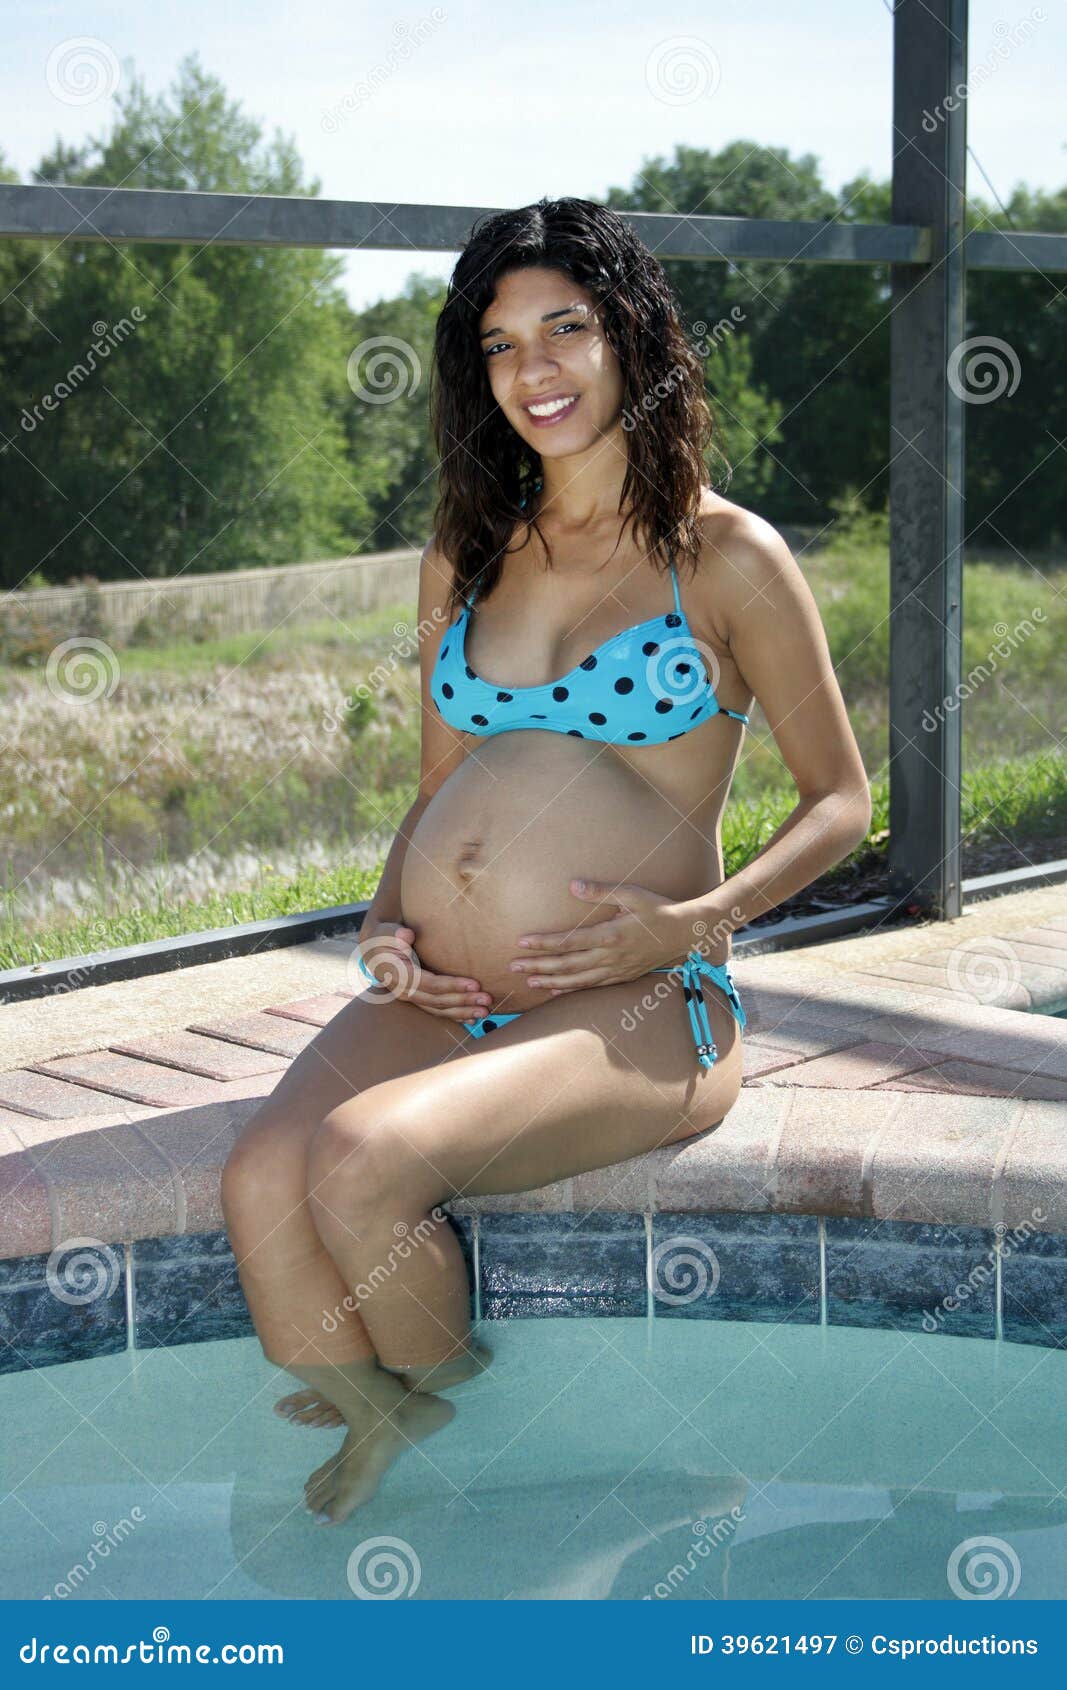 Young Pregnant Woman Poolside (1) Stock Image - Image of bikini